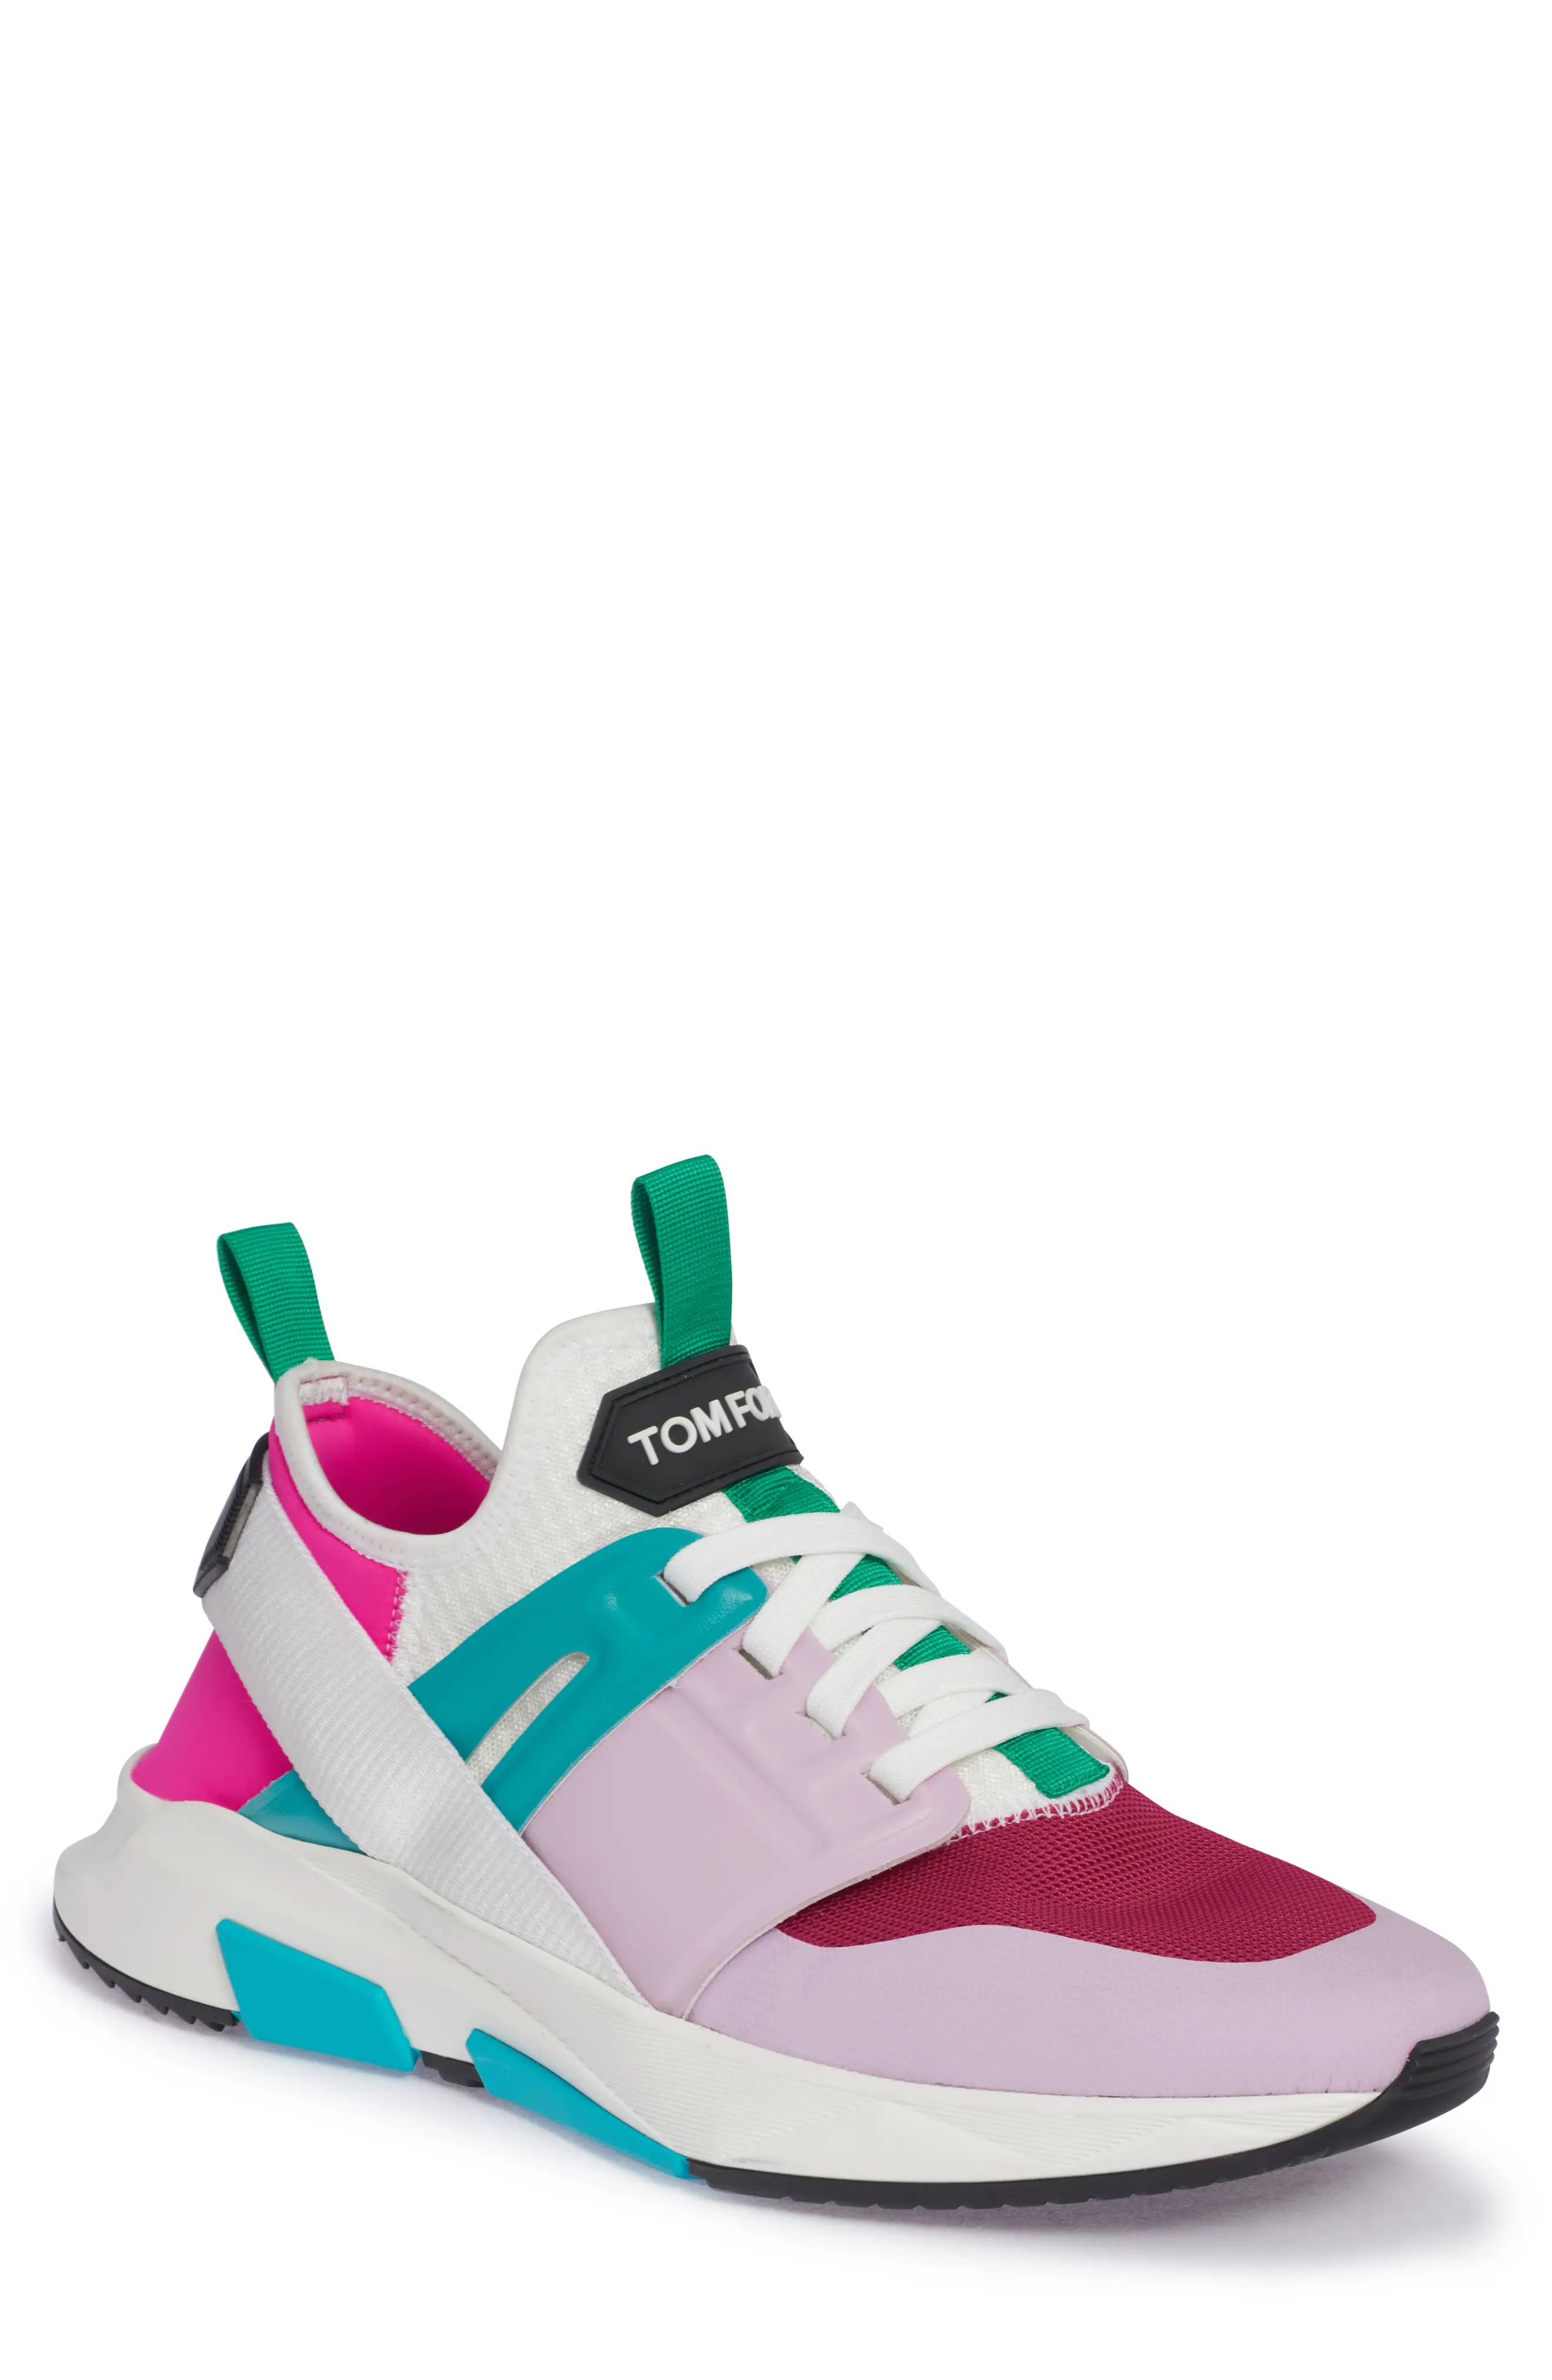 Jago Mixed Media Sneaker in Fuchsia/Pink/White - 1